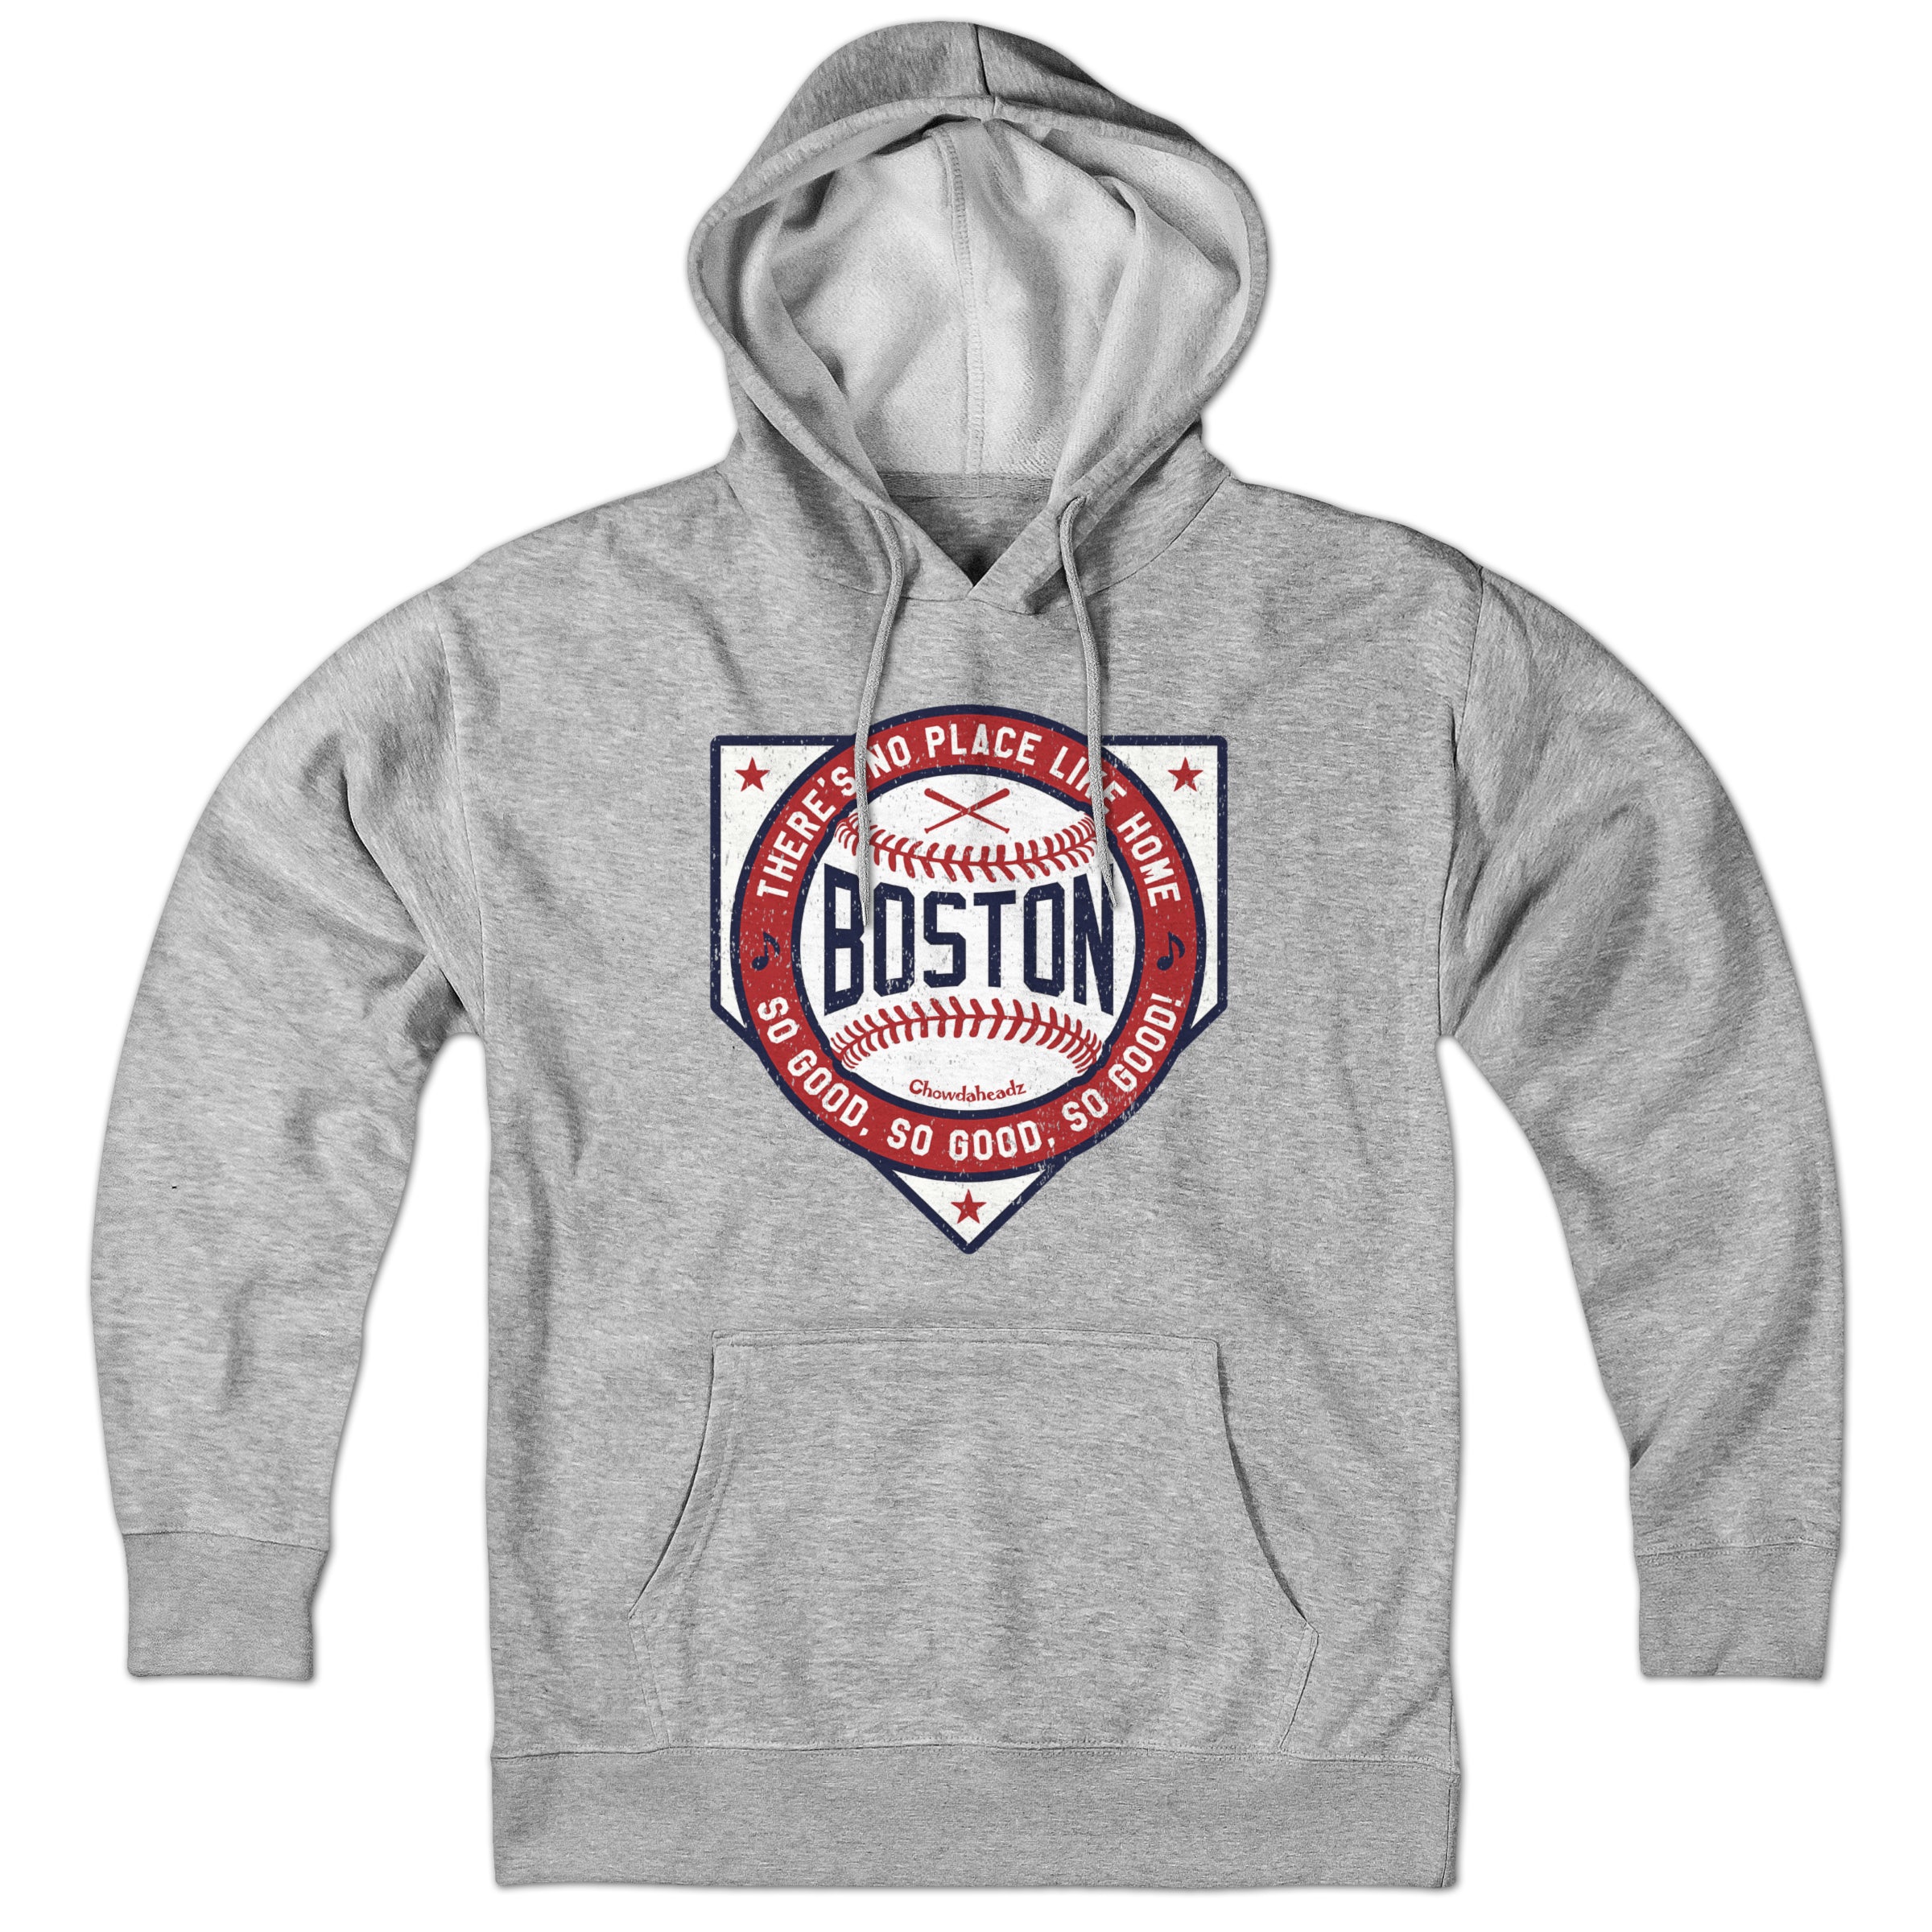 Boston Red Sox Sweatshirts in Boston Red Sox Team Shop